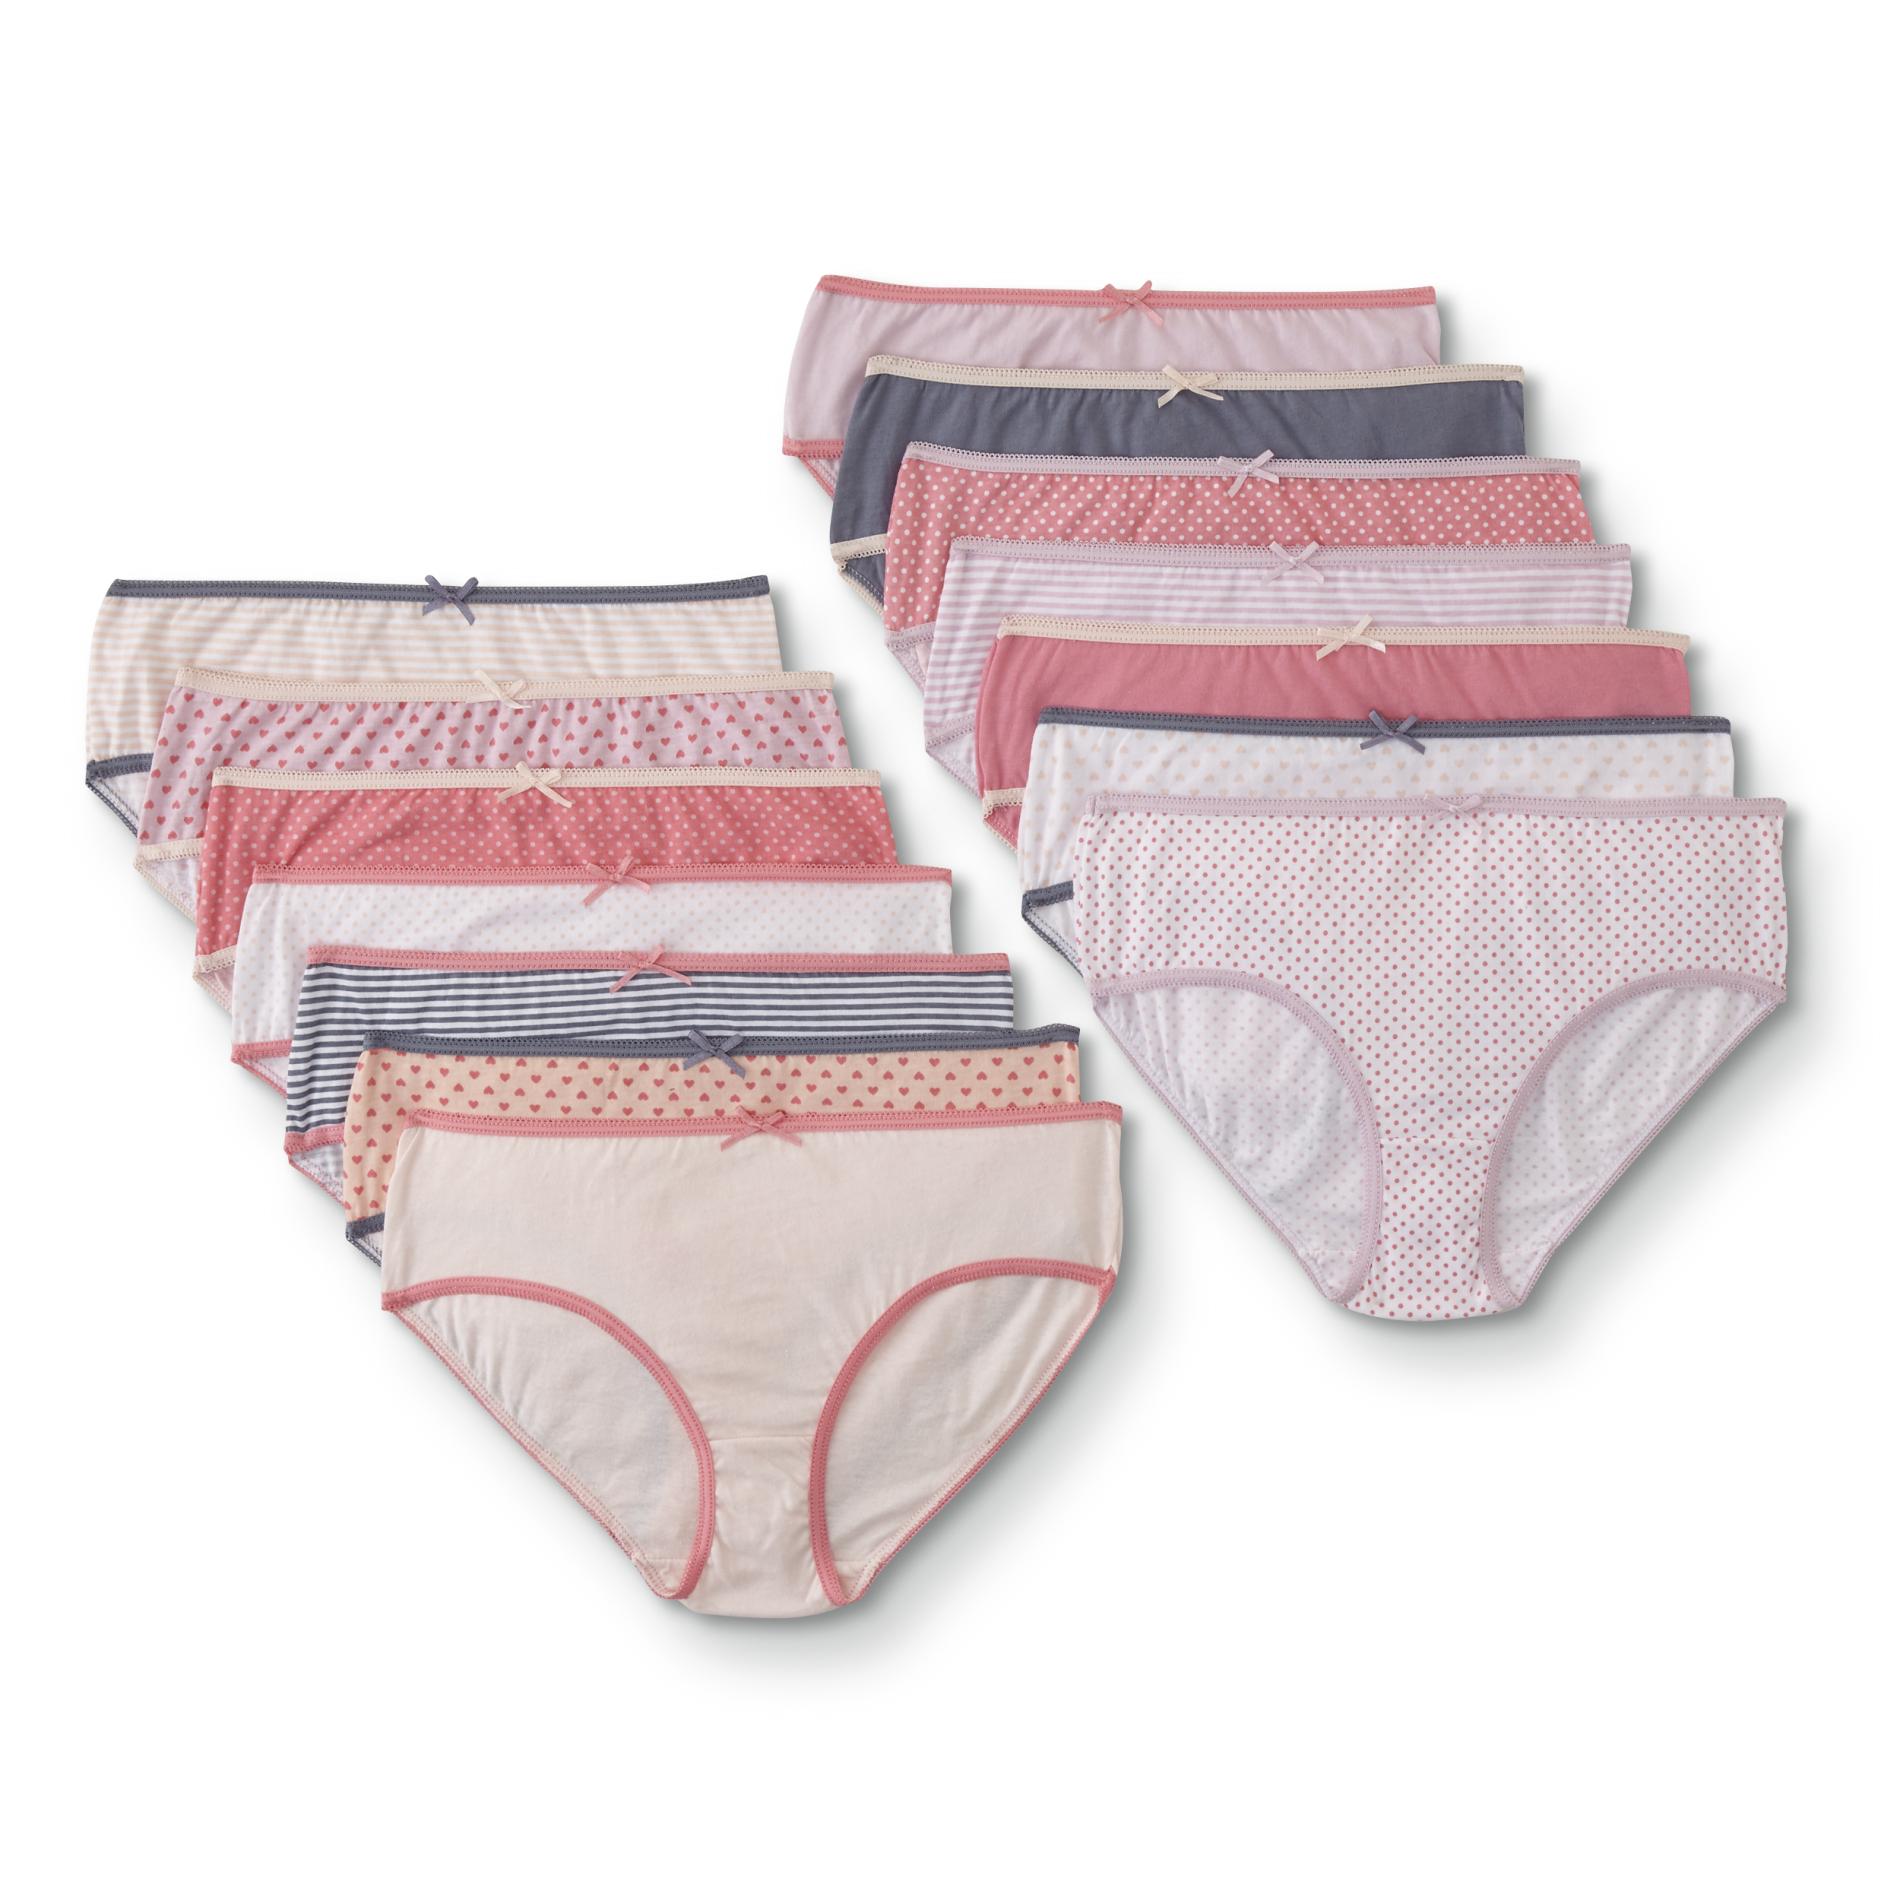 Girls' 14-Pack Brief Panties - Assortment